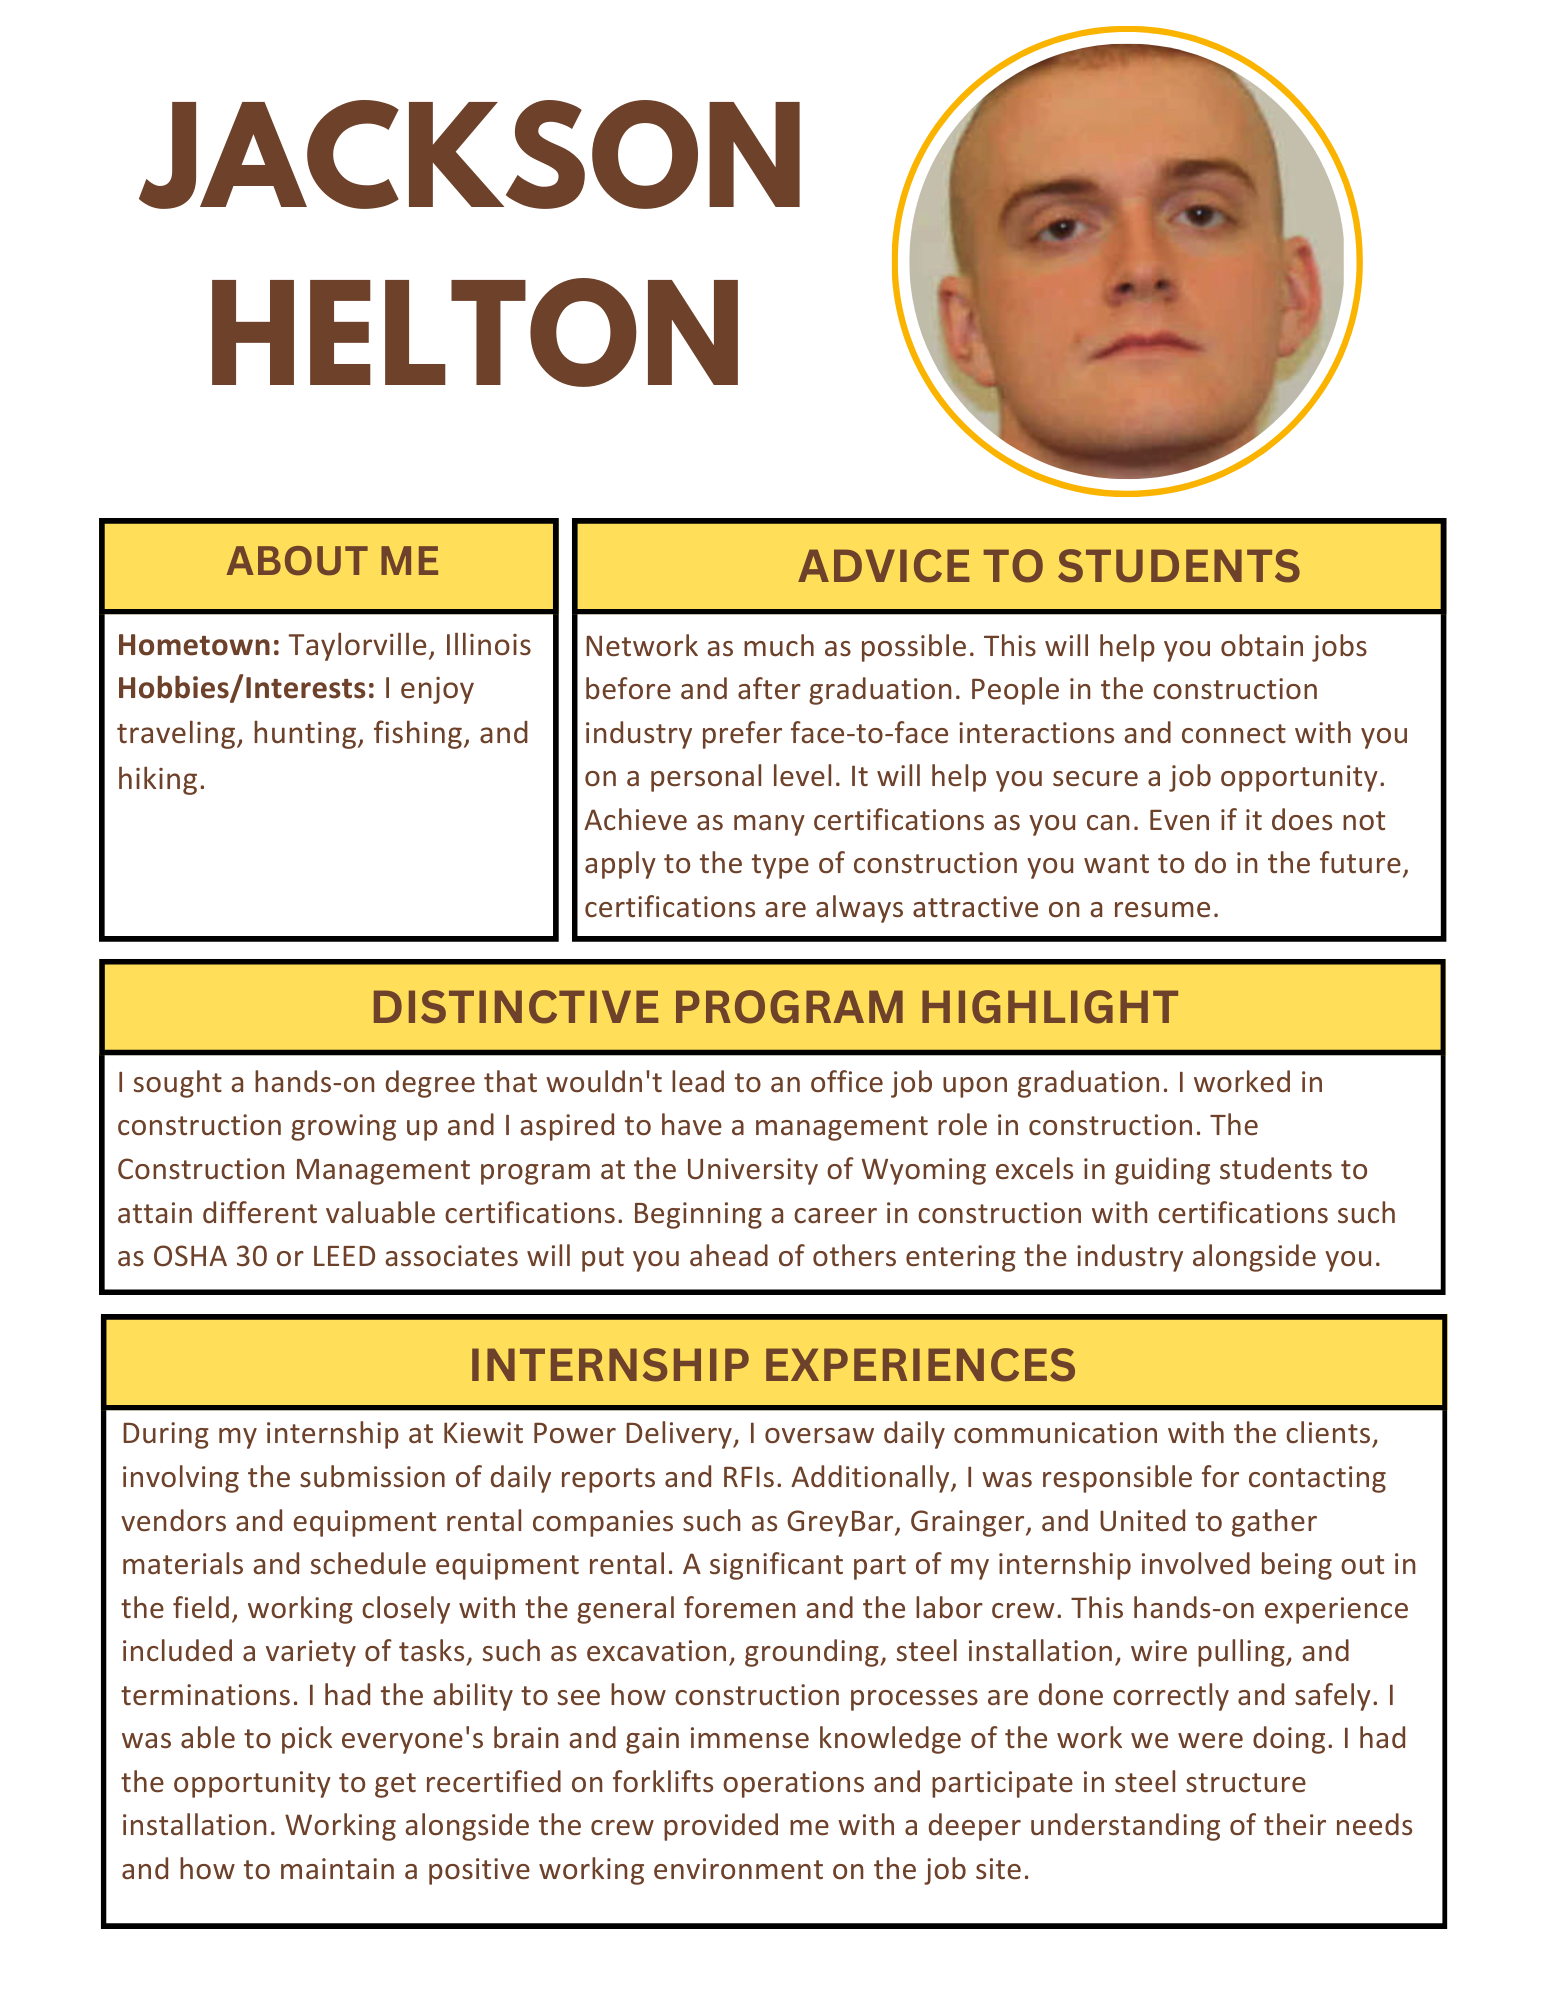 Jackson Helton Biography